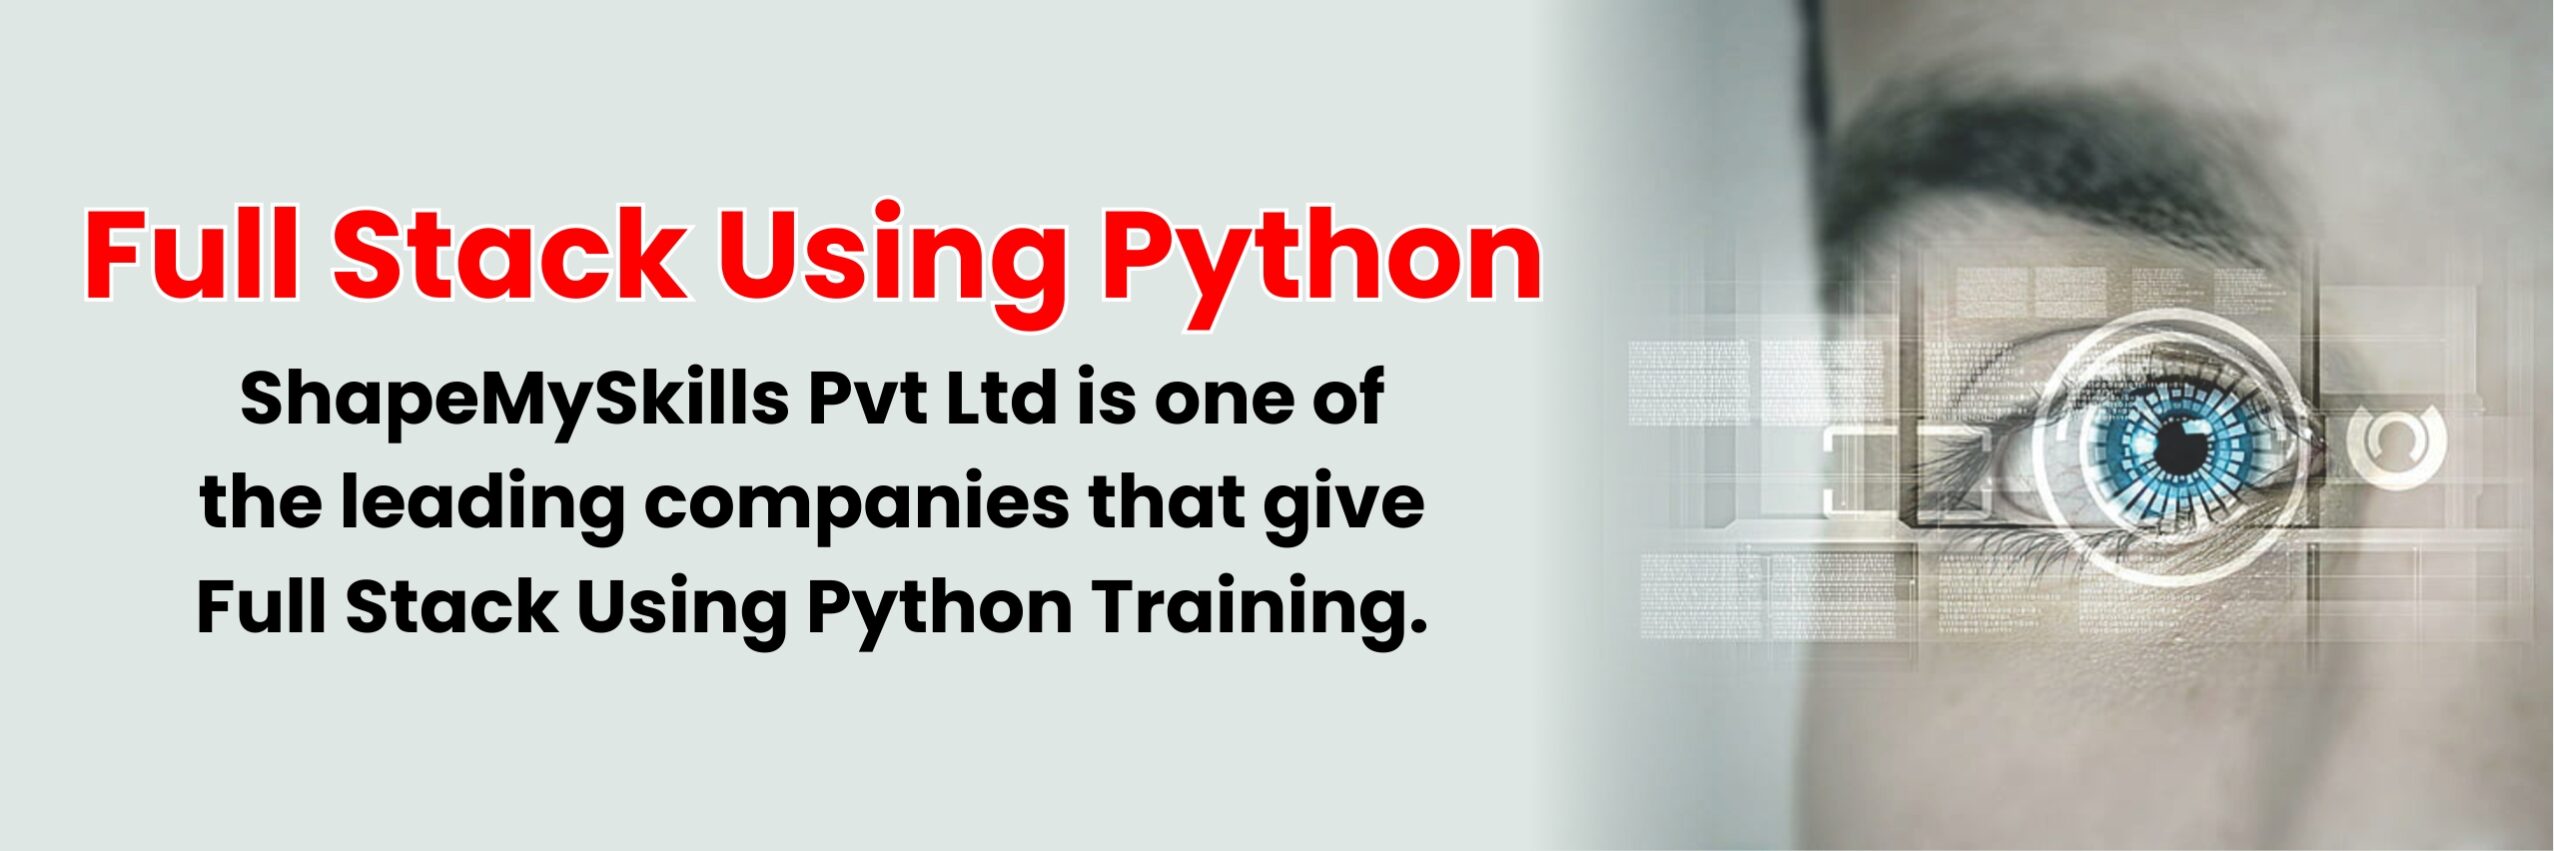 Python Full Stack Developer Course | Python Full Stack Course